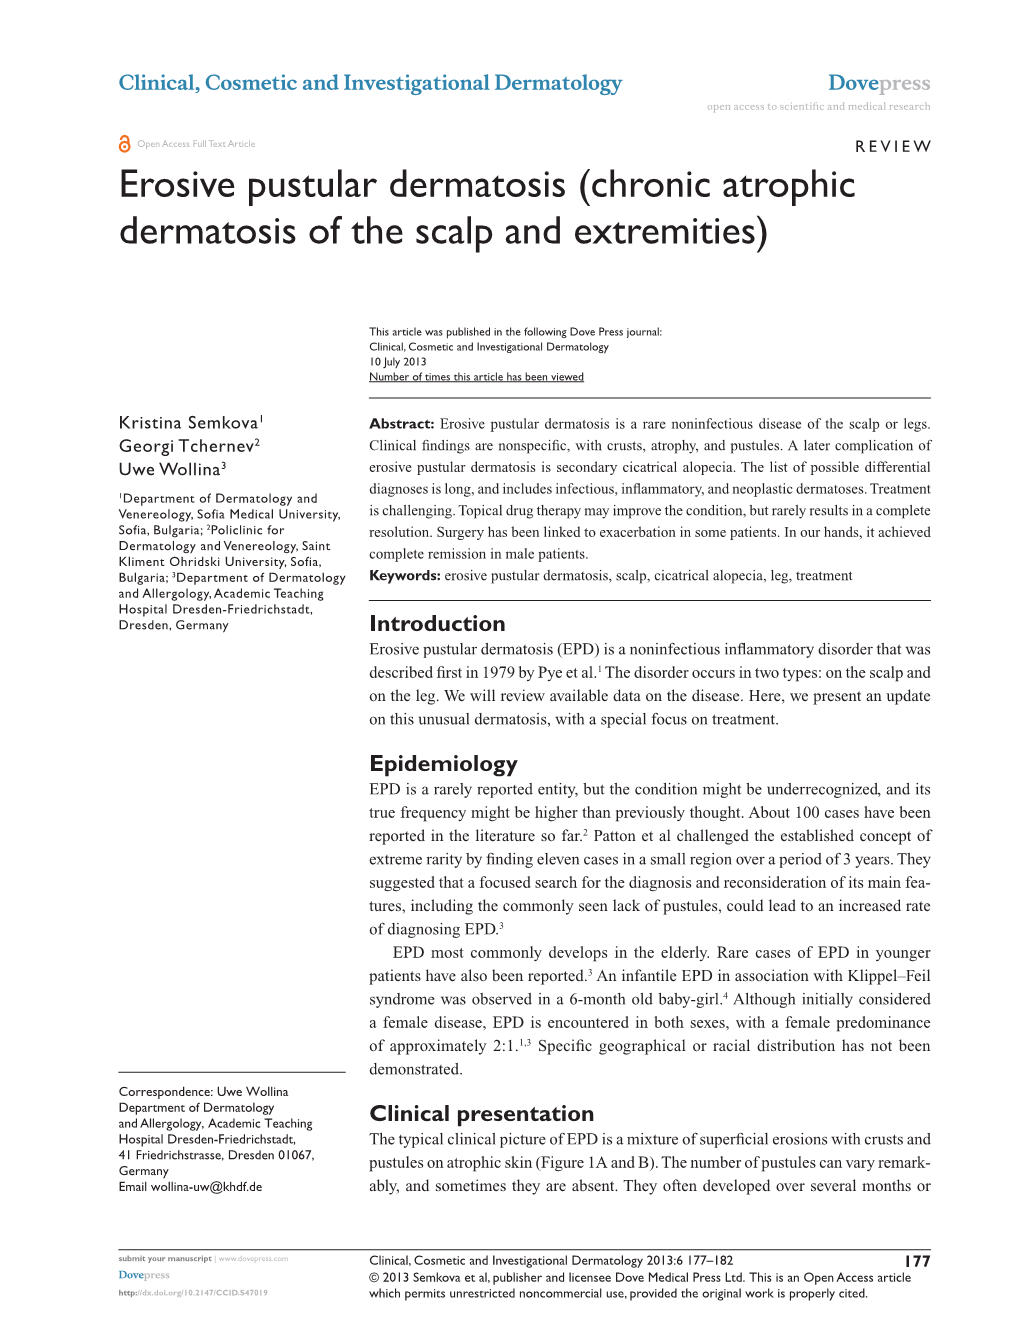 Erosive Pustular Dermatosis (Chronic Atrophic Dermatosis of the Scalp and Extremities)